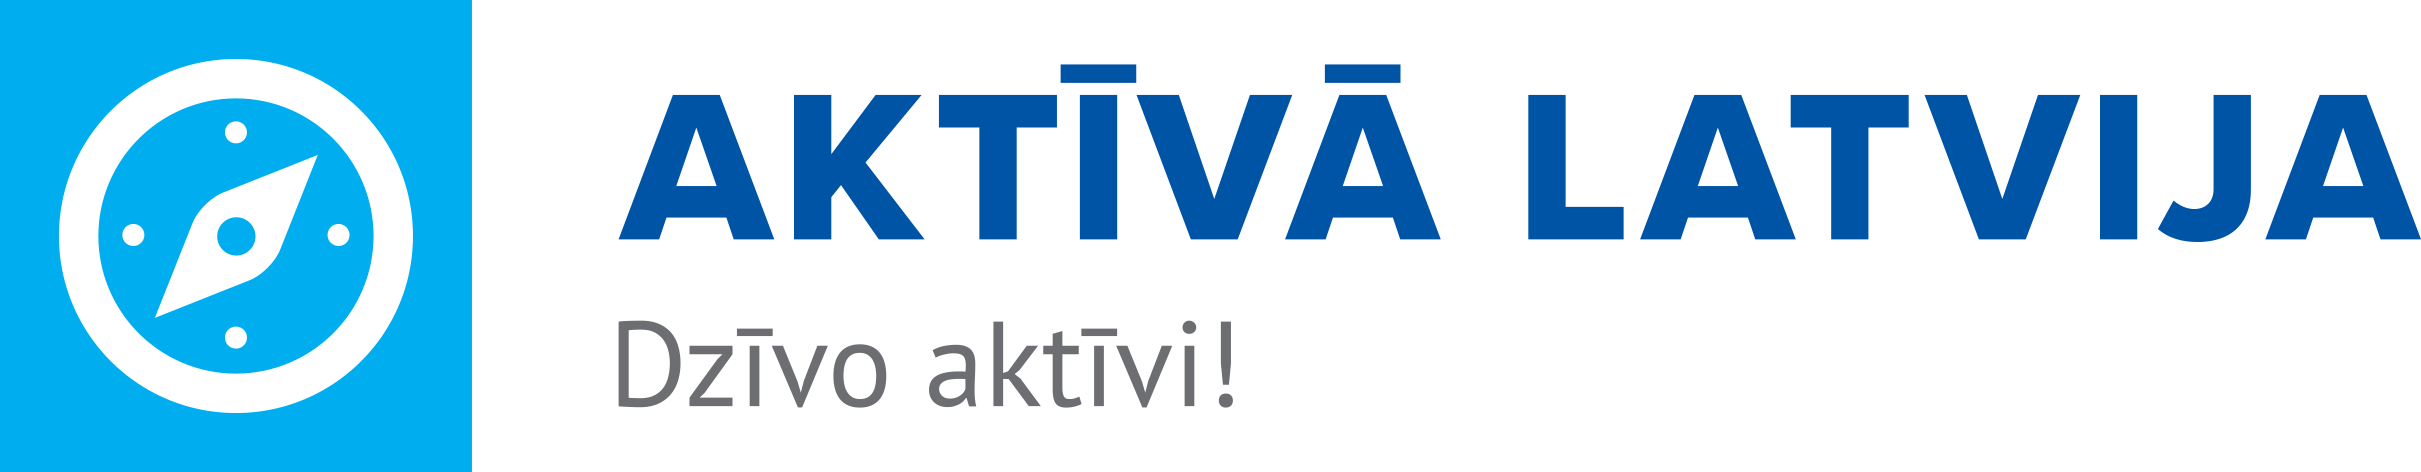 active-latvia-logotype-1_png